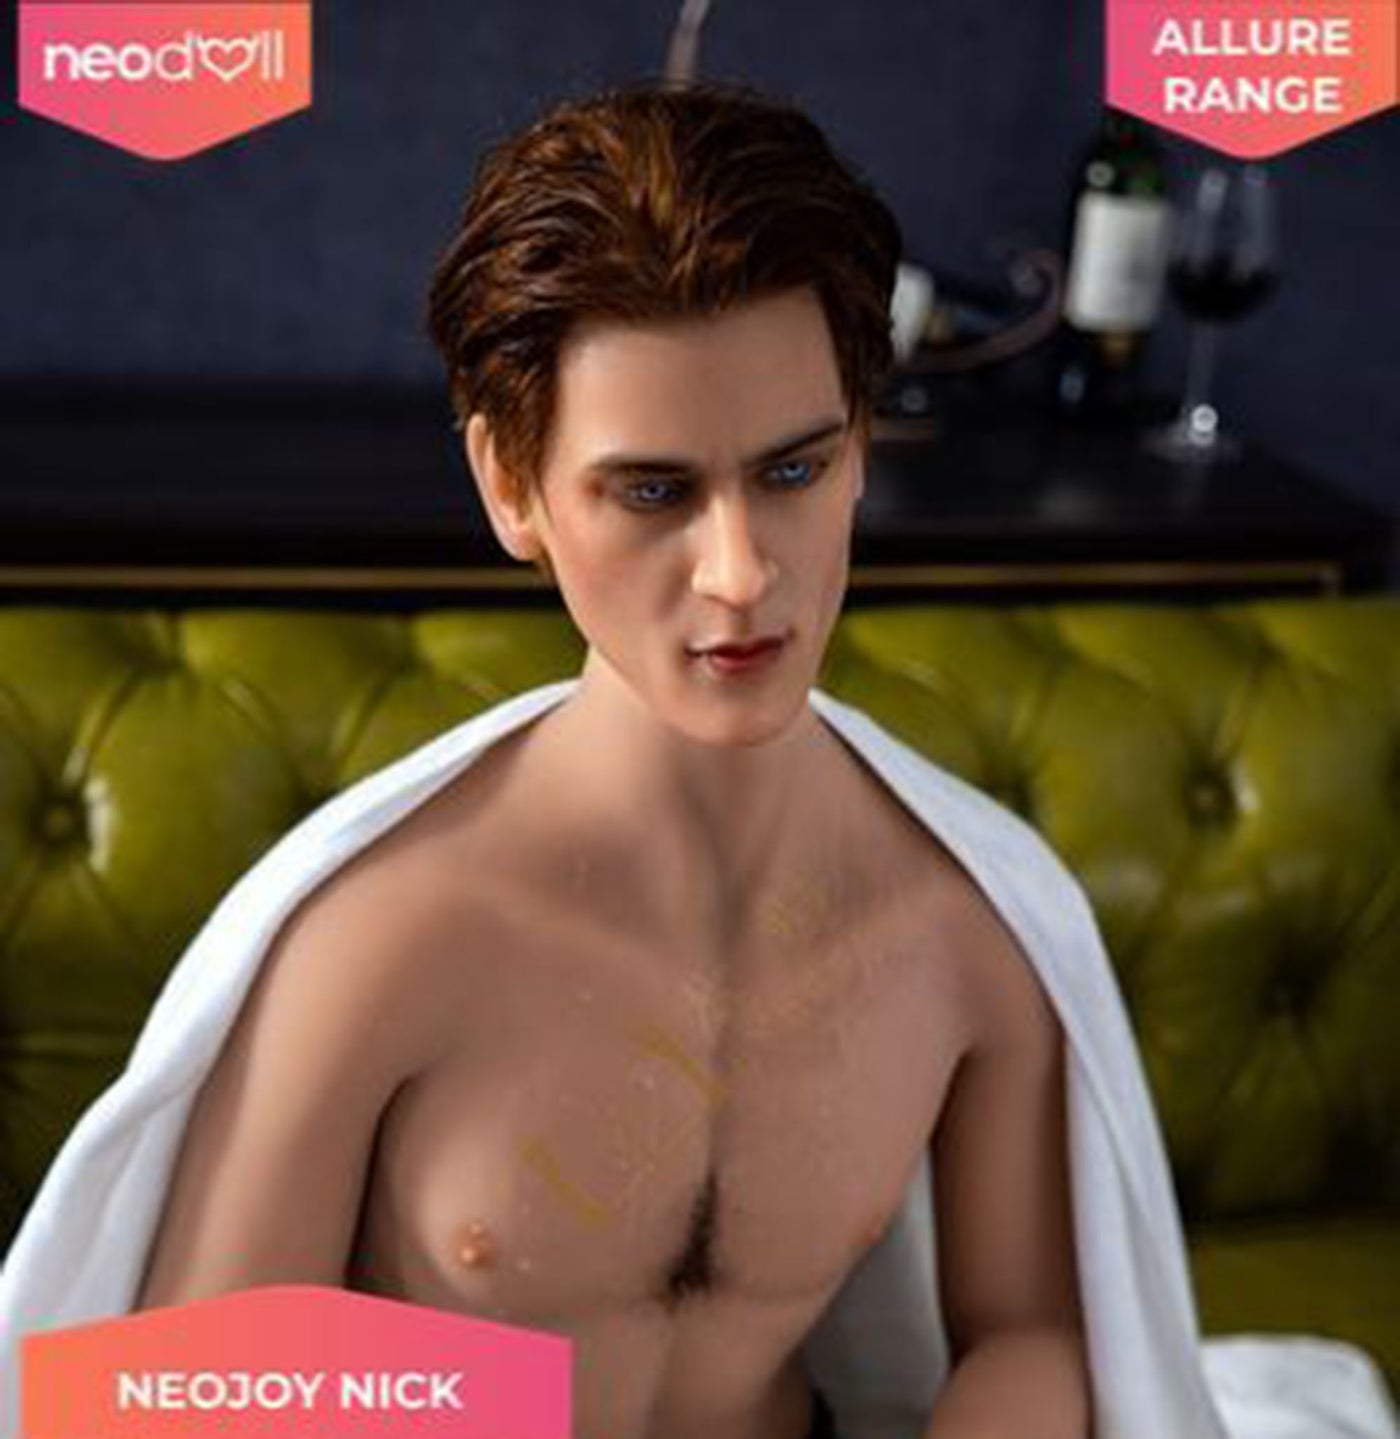 Neodoll Allure - Nick - Realistic Male Sex Doll - 173cm - Tan - 23cm Penis